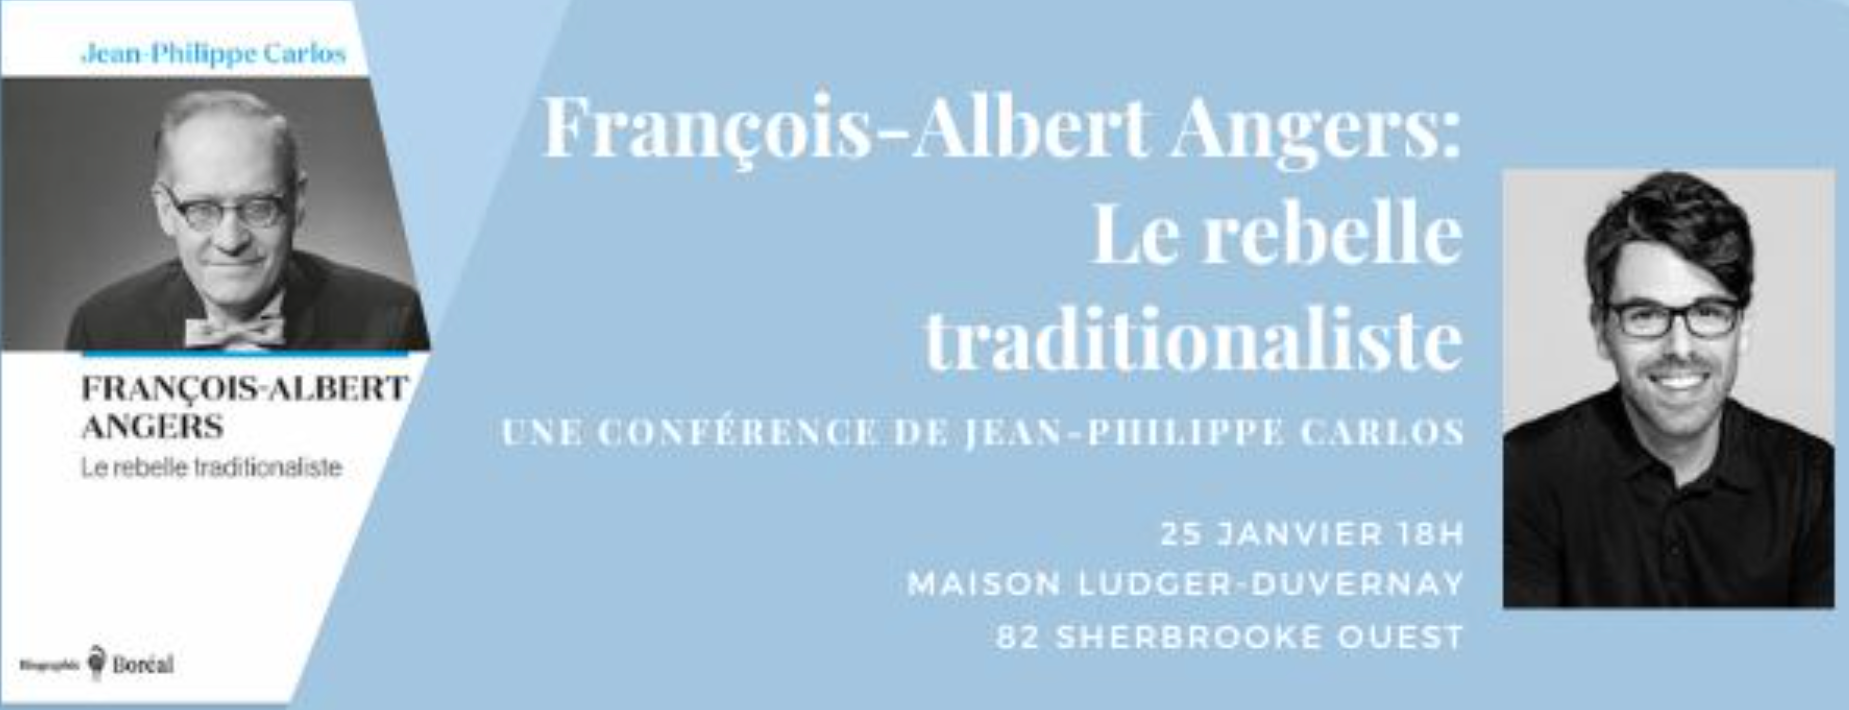 FRANCOIS-ALBERT ANGERS Le rebelle traditionaliste: Conférence de Jean-Philippe Carlos